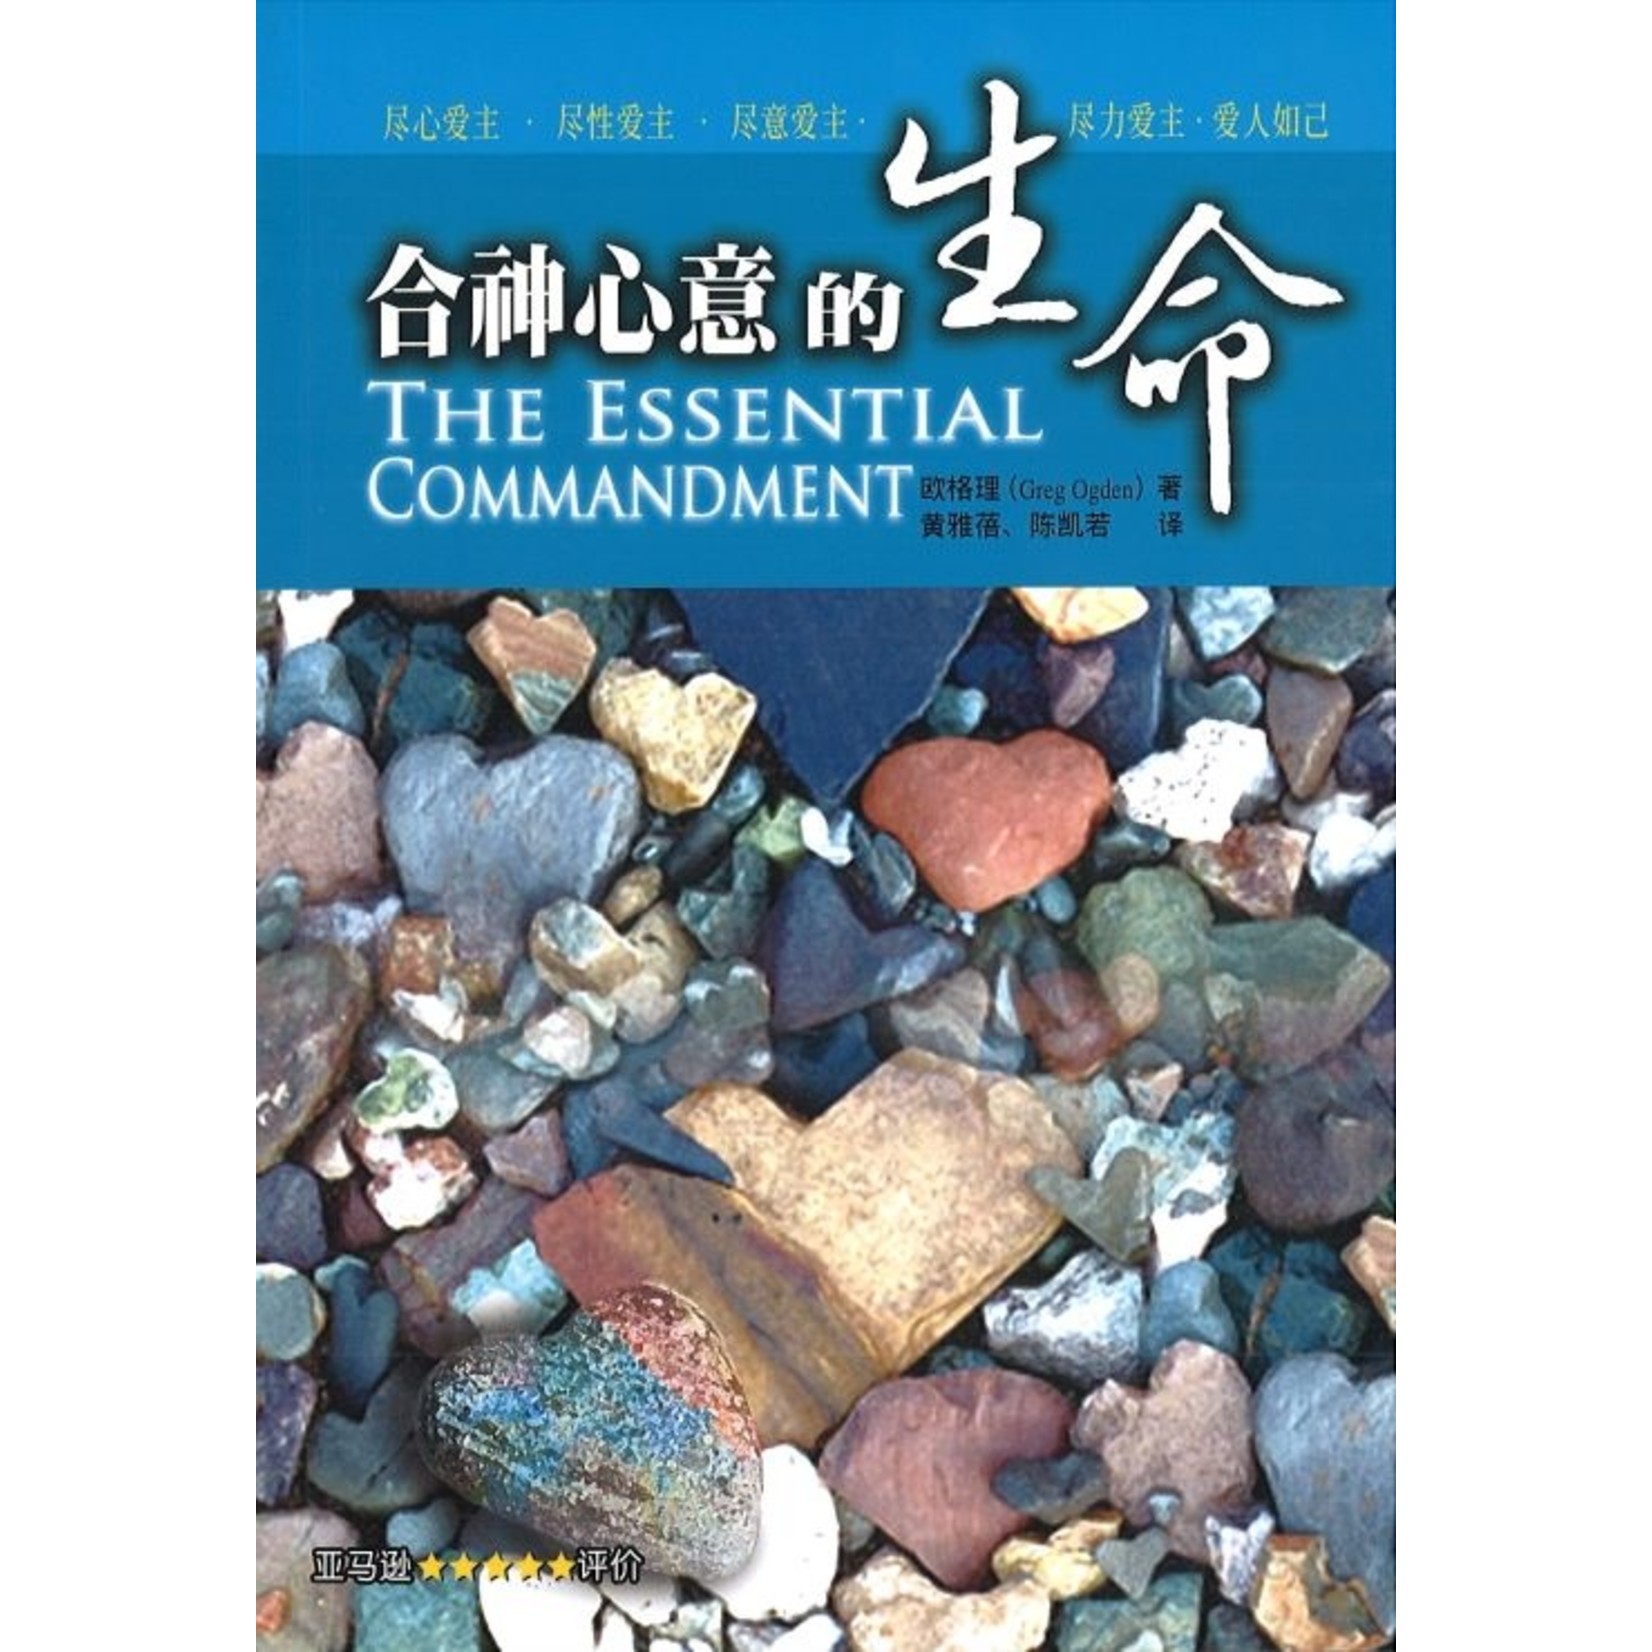 福音證主協會 Christian Communication Inc 合神心意的生命（简体） The Essential Commandment